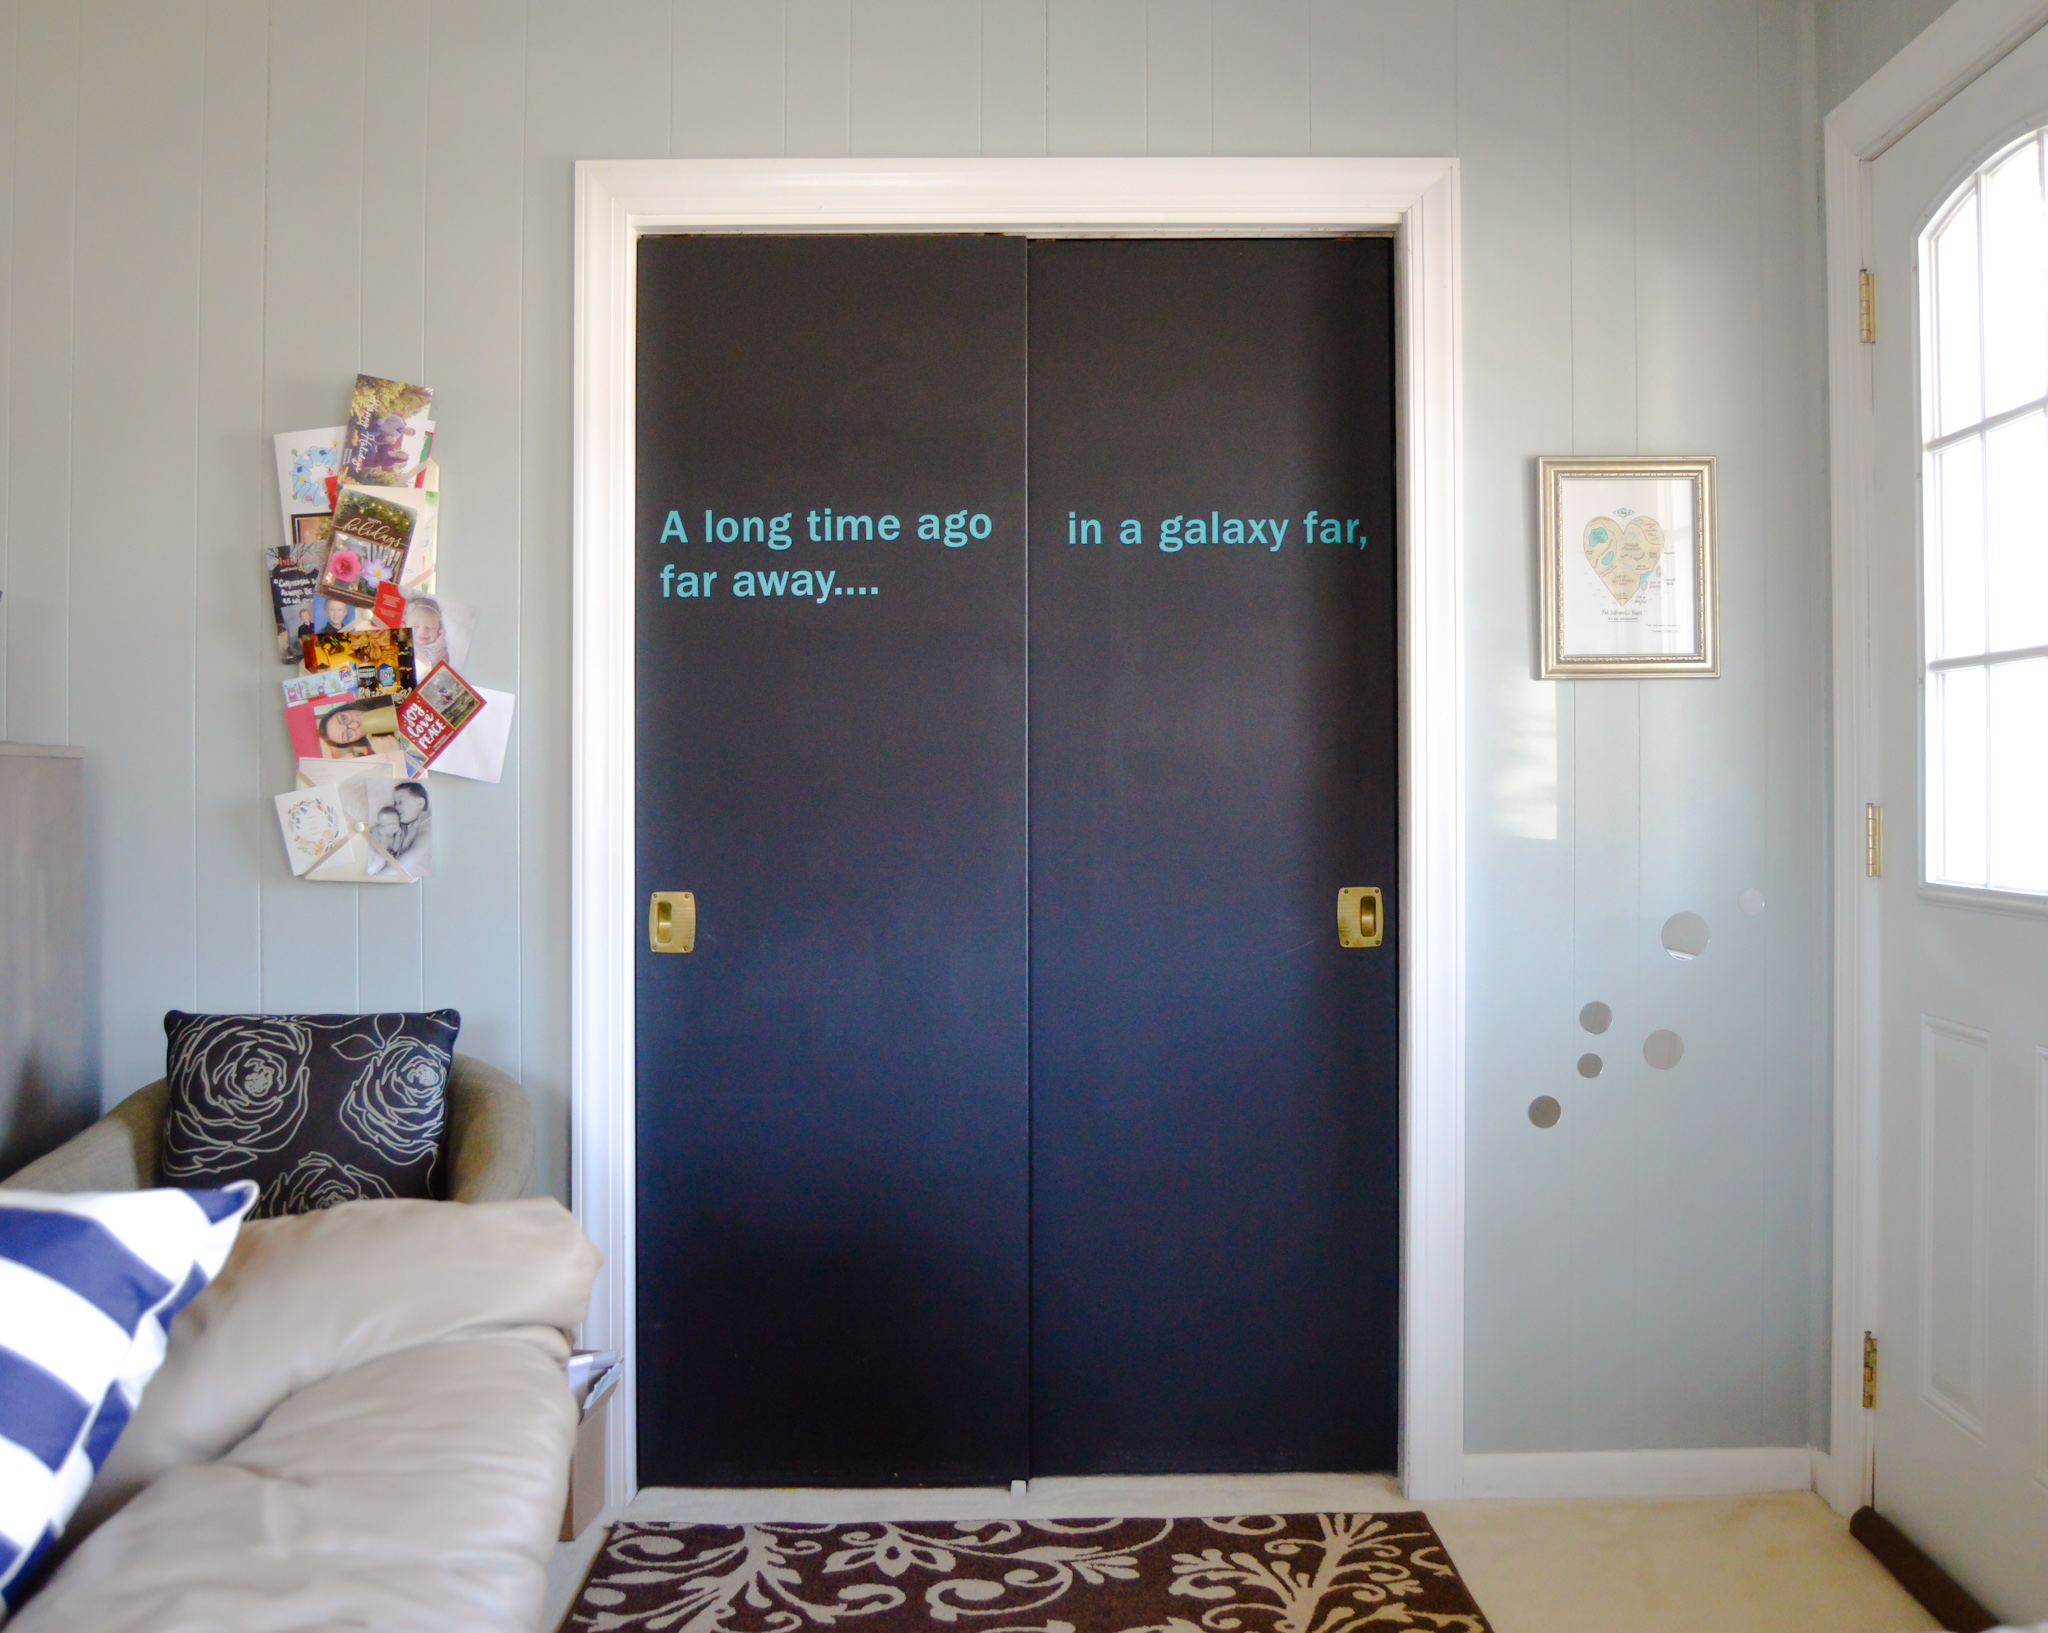 Black closet doors with Star Wars quote